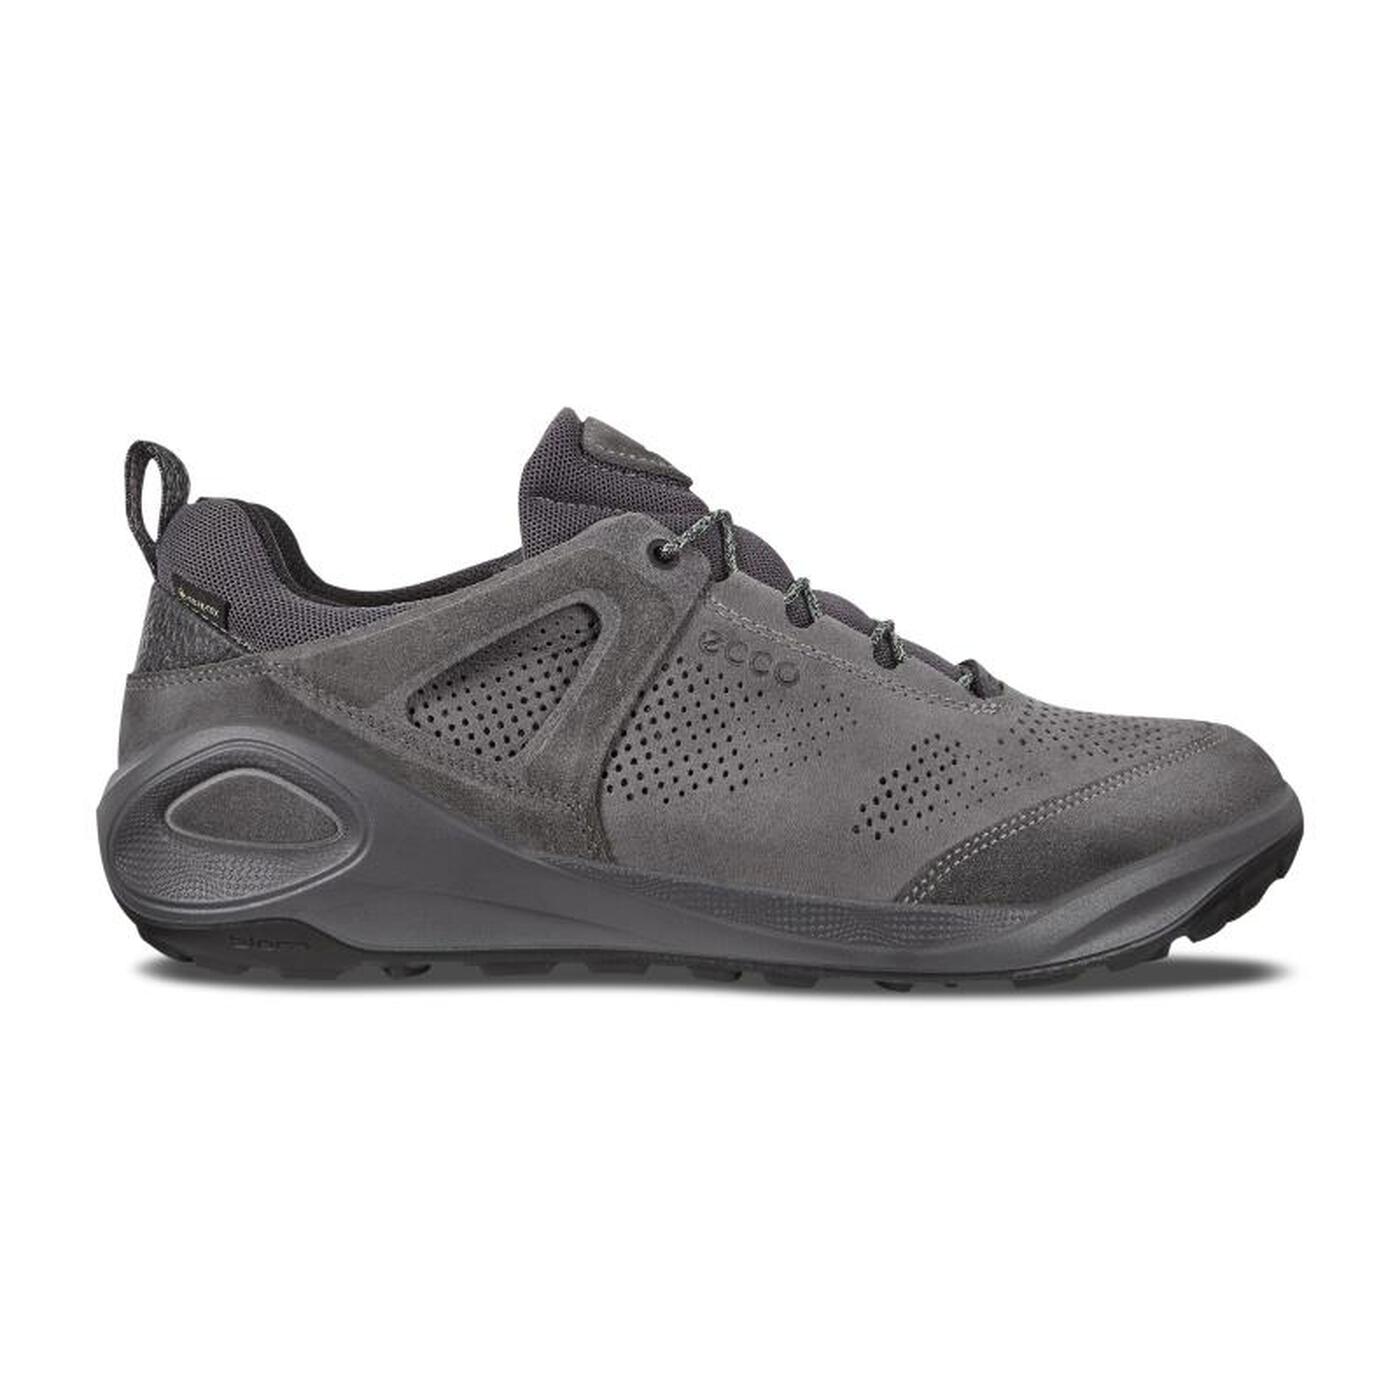 Biom 2 Go Men's Low GTX Shoes | Hiking Shoes | ECCO® Shoe